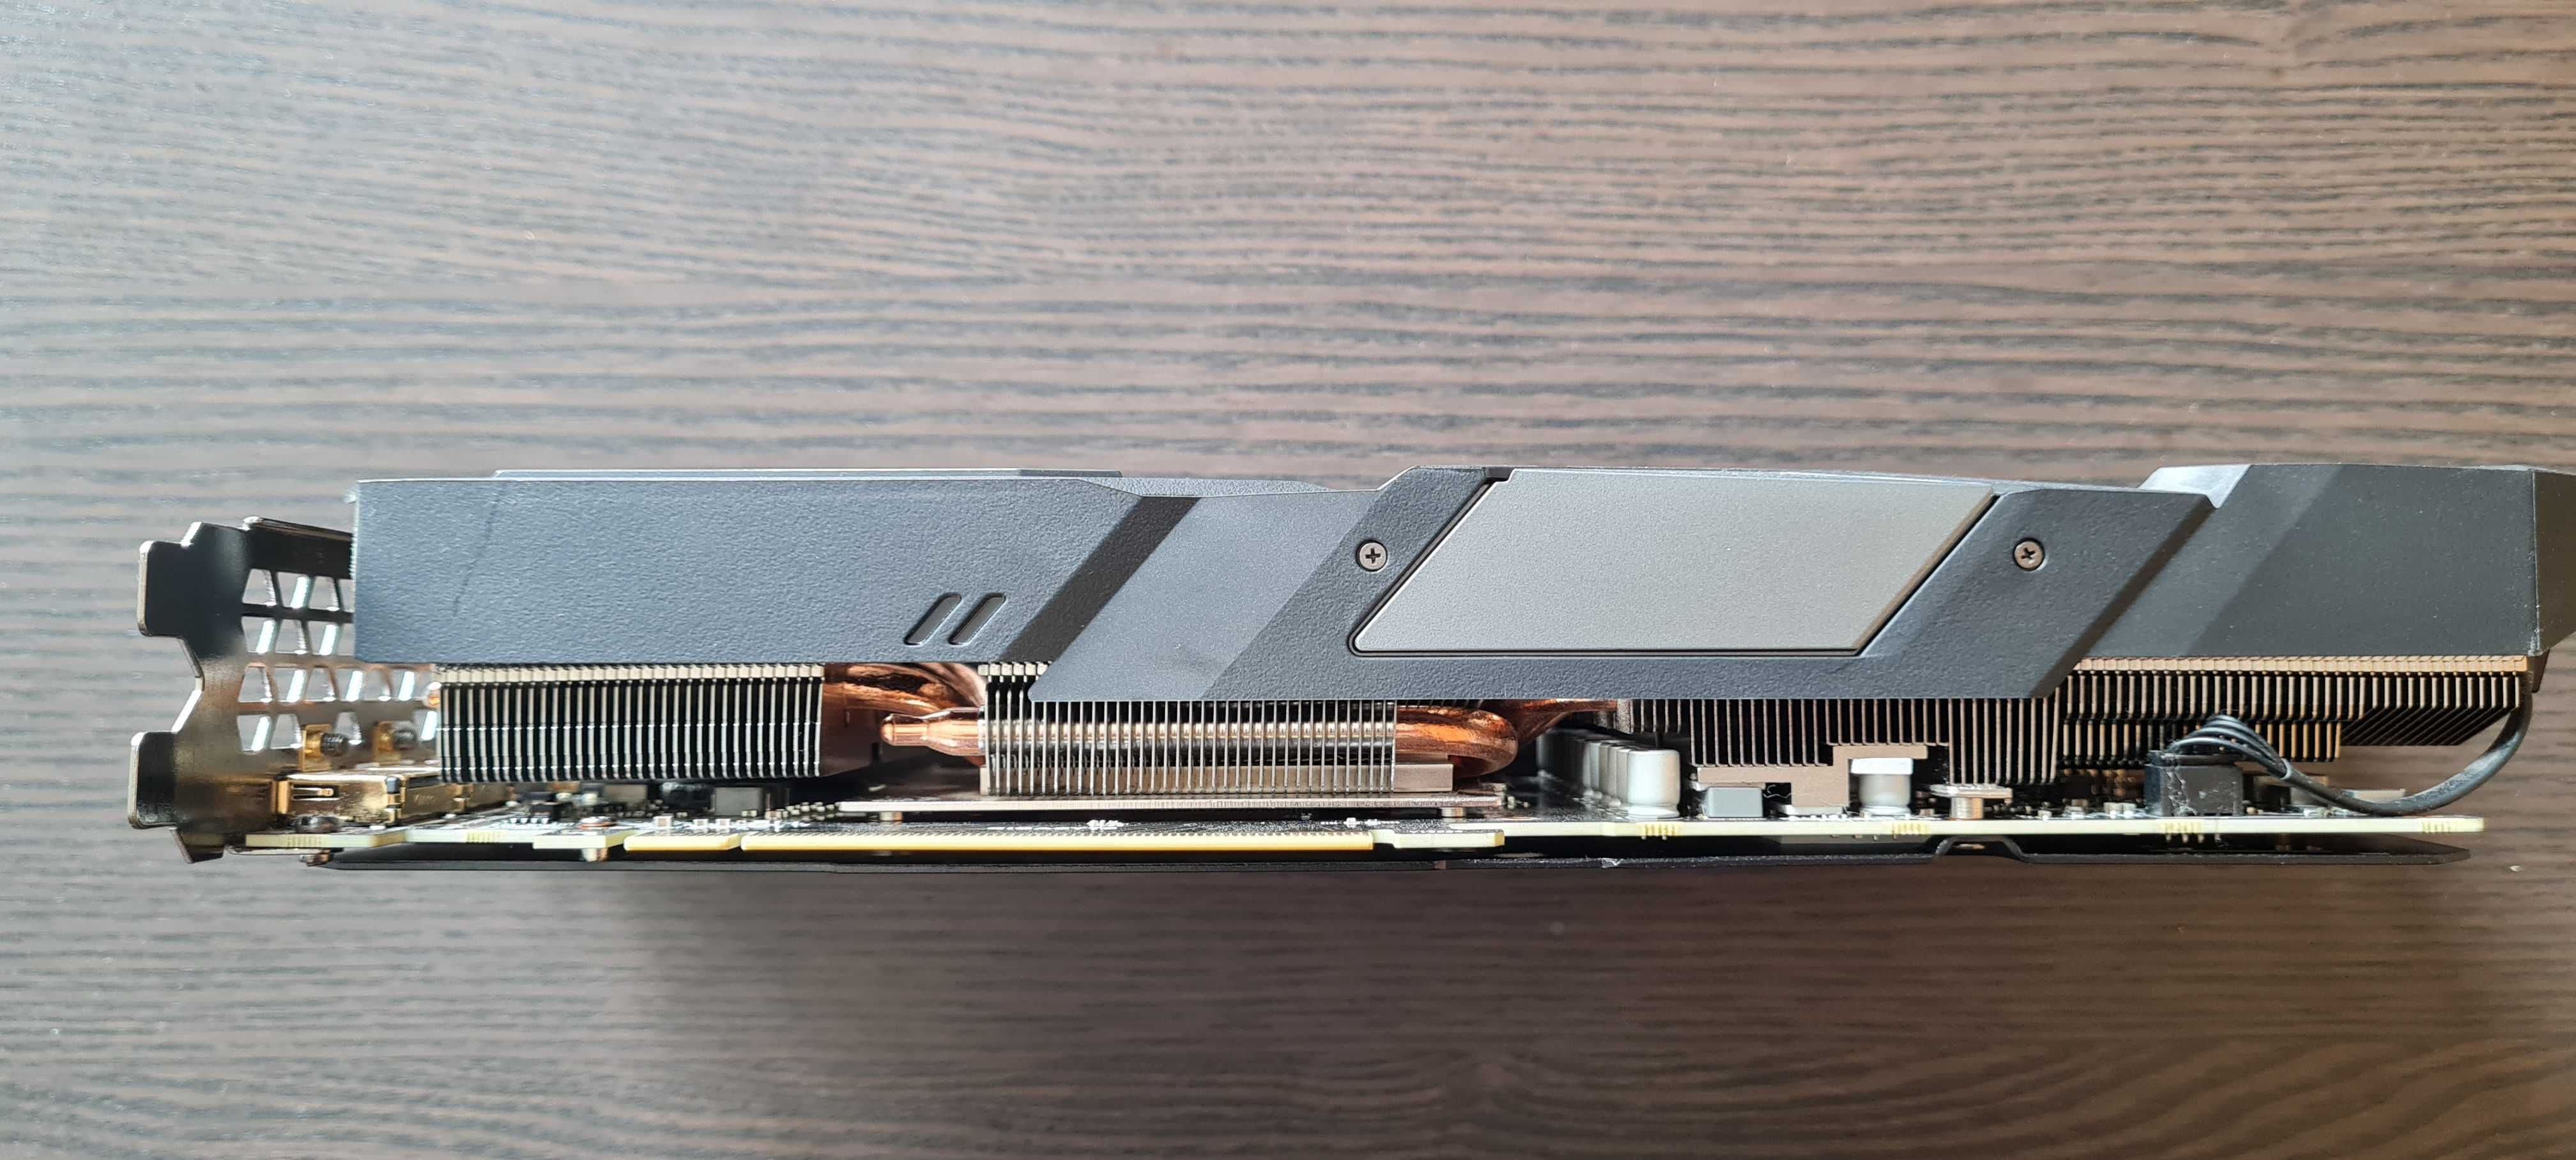 Gigabyte GeForce RTX 2070 SUPER GAMING OC 8GB